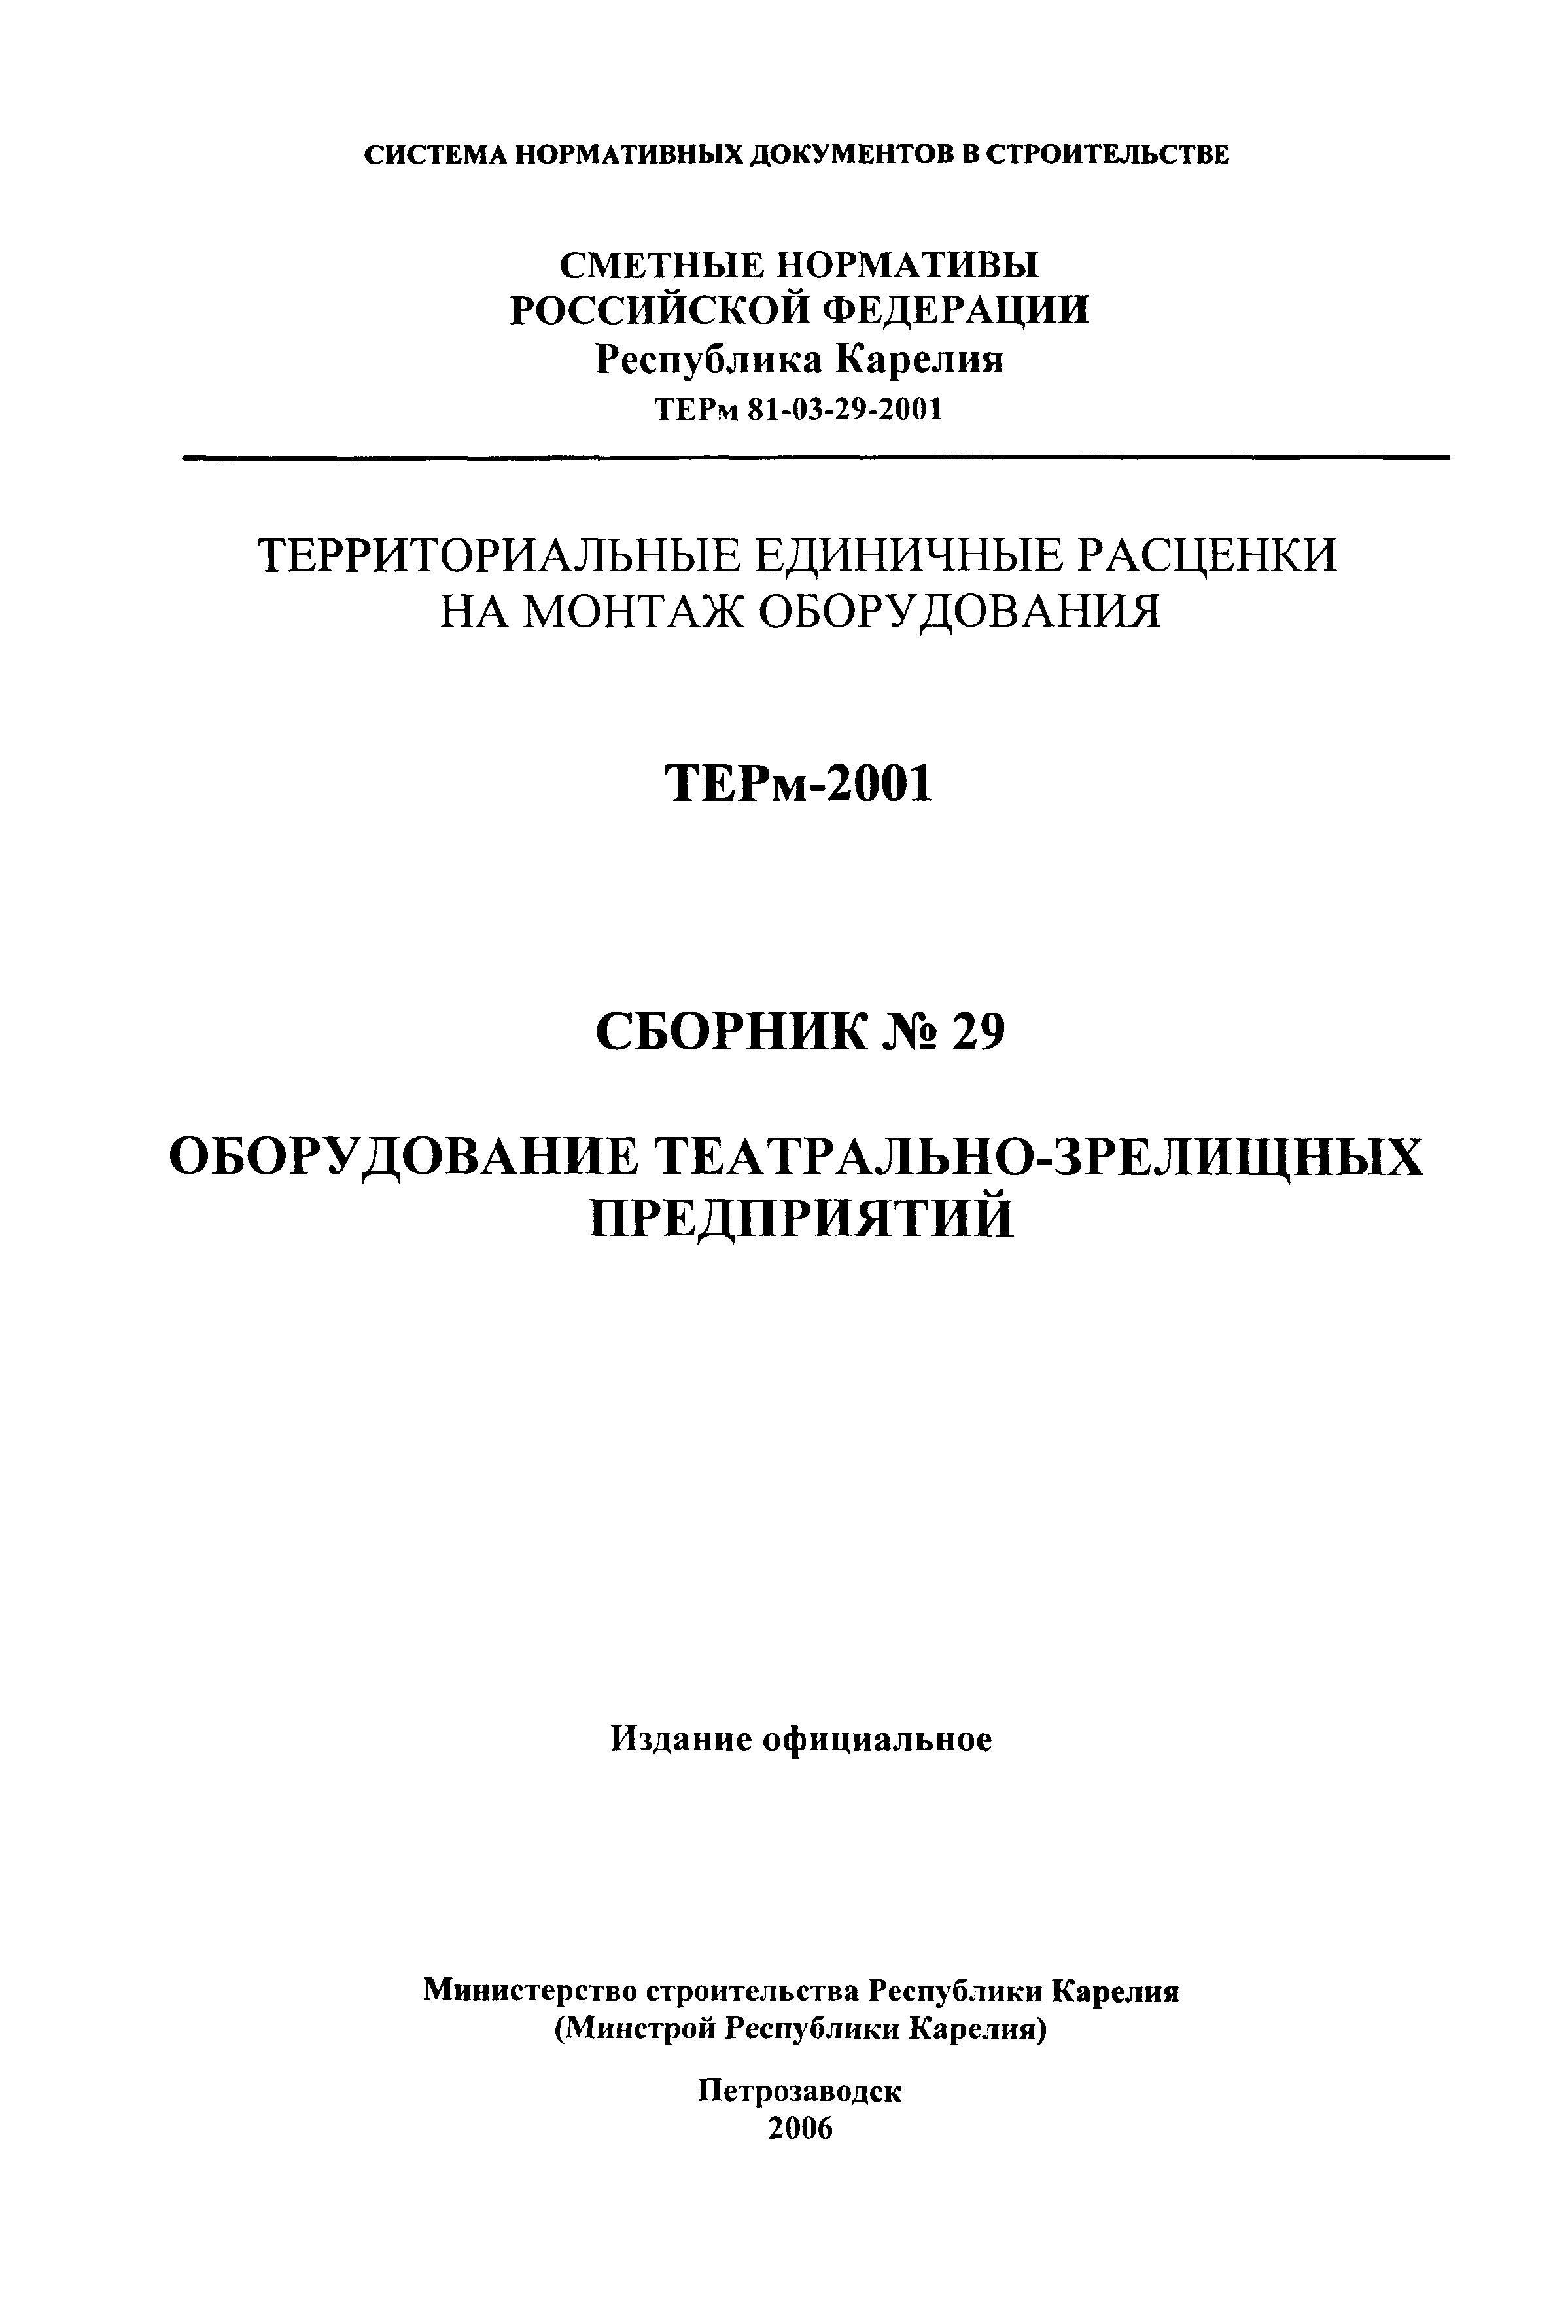 ТЕРм Республика Карелия 2001-29